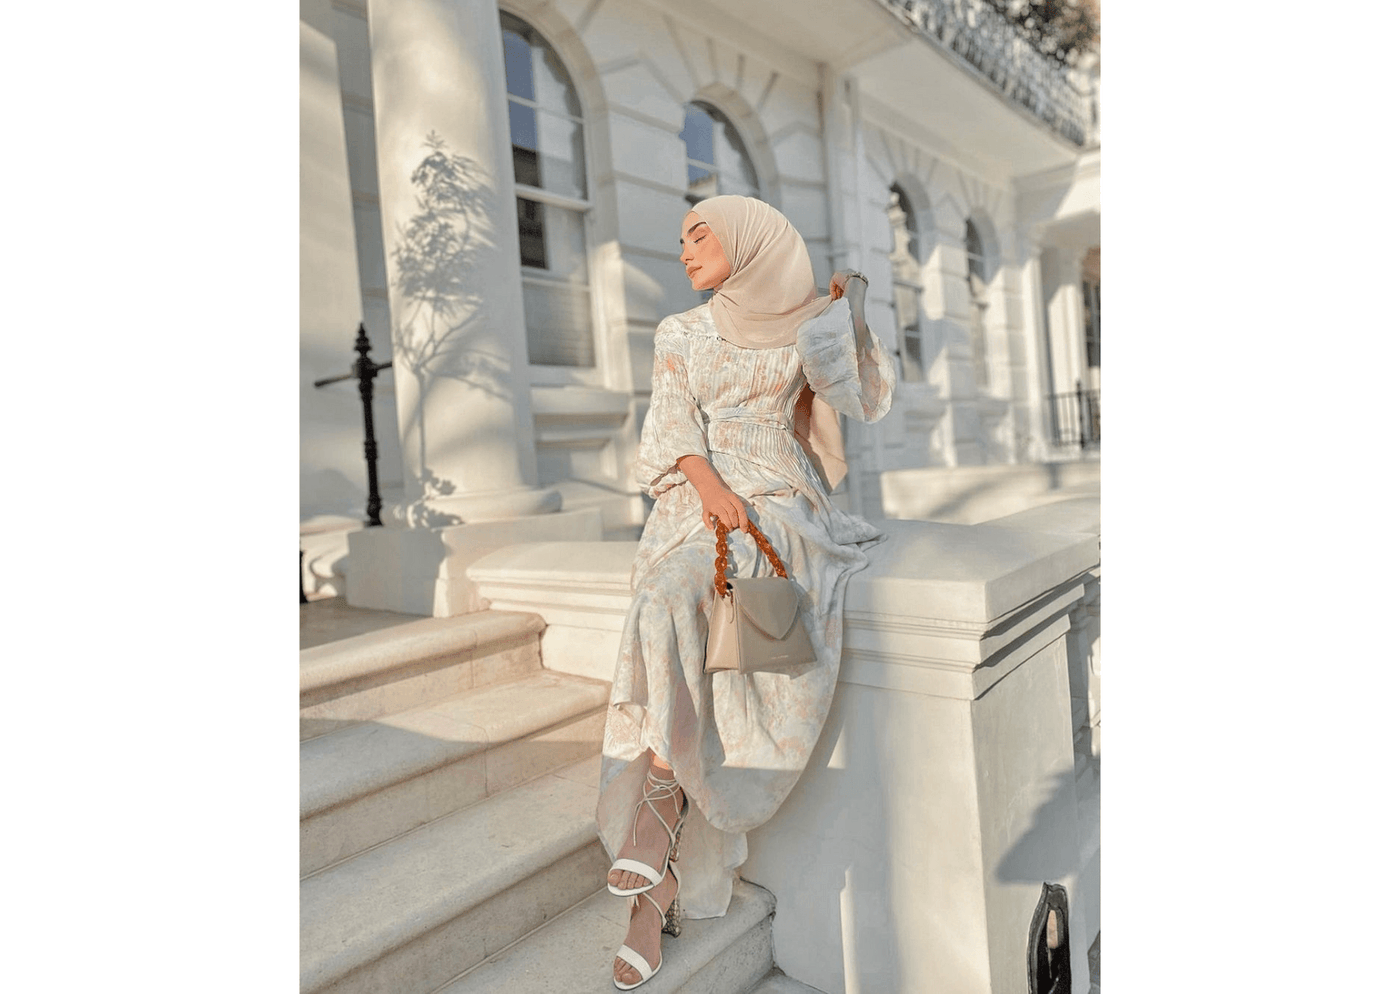 Celebrate Eid in Fashion-Forward Modest and Chic Looks: Eid Style Inspiration - Freya Rose